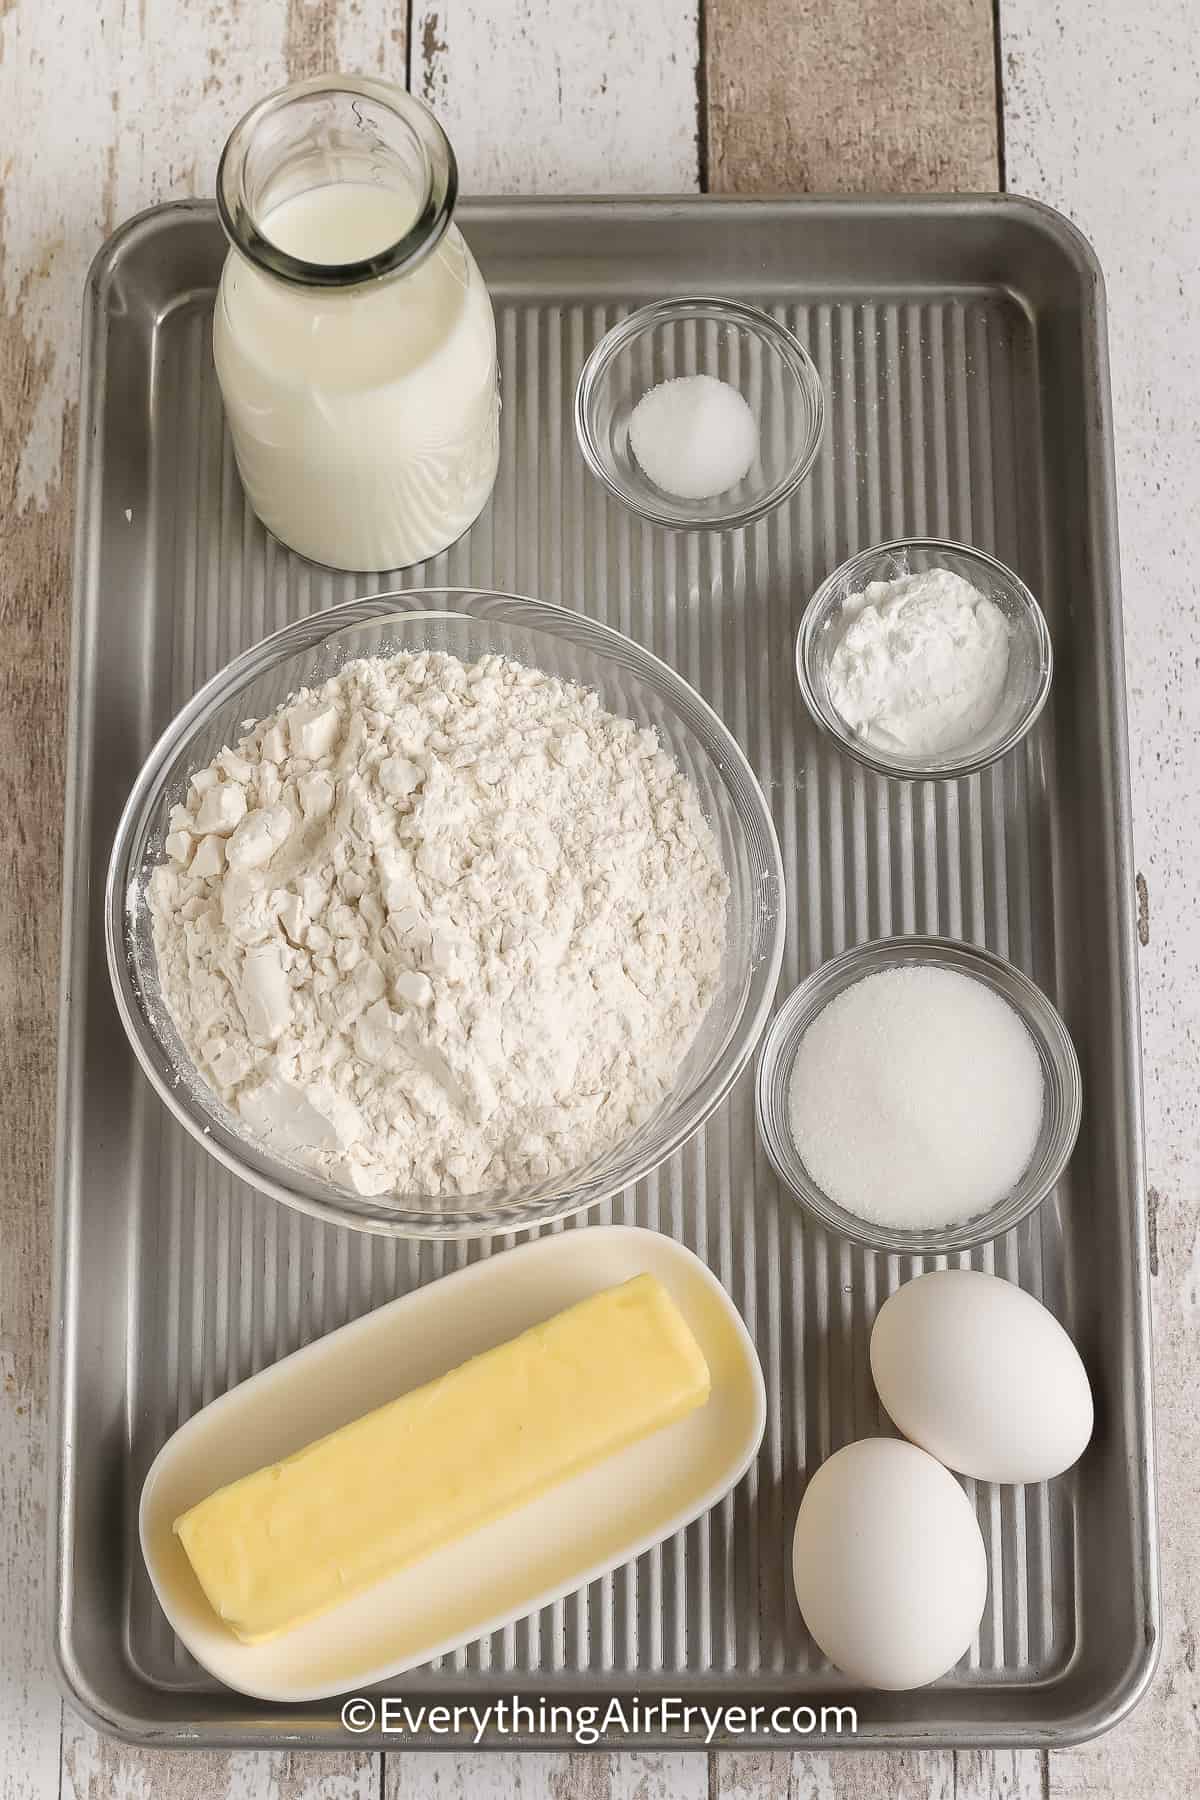 ingredients assembled to make eggo mini waffles